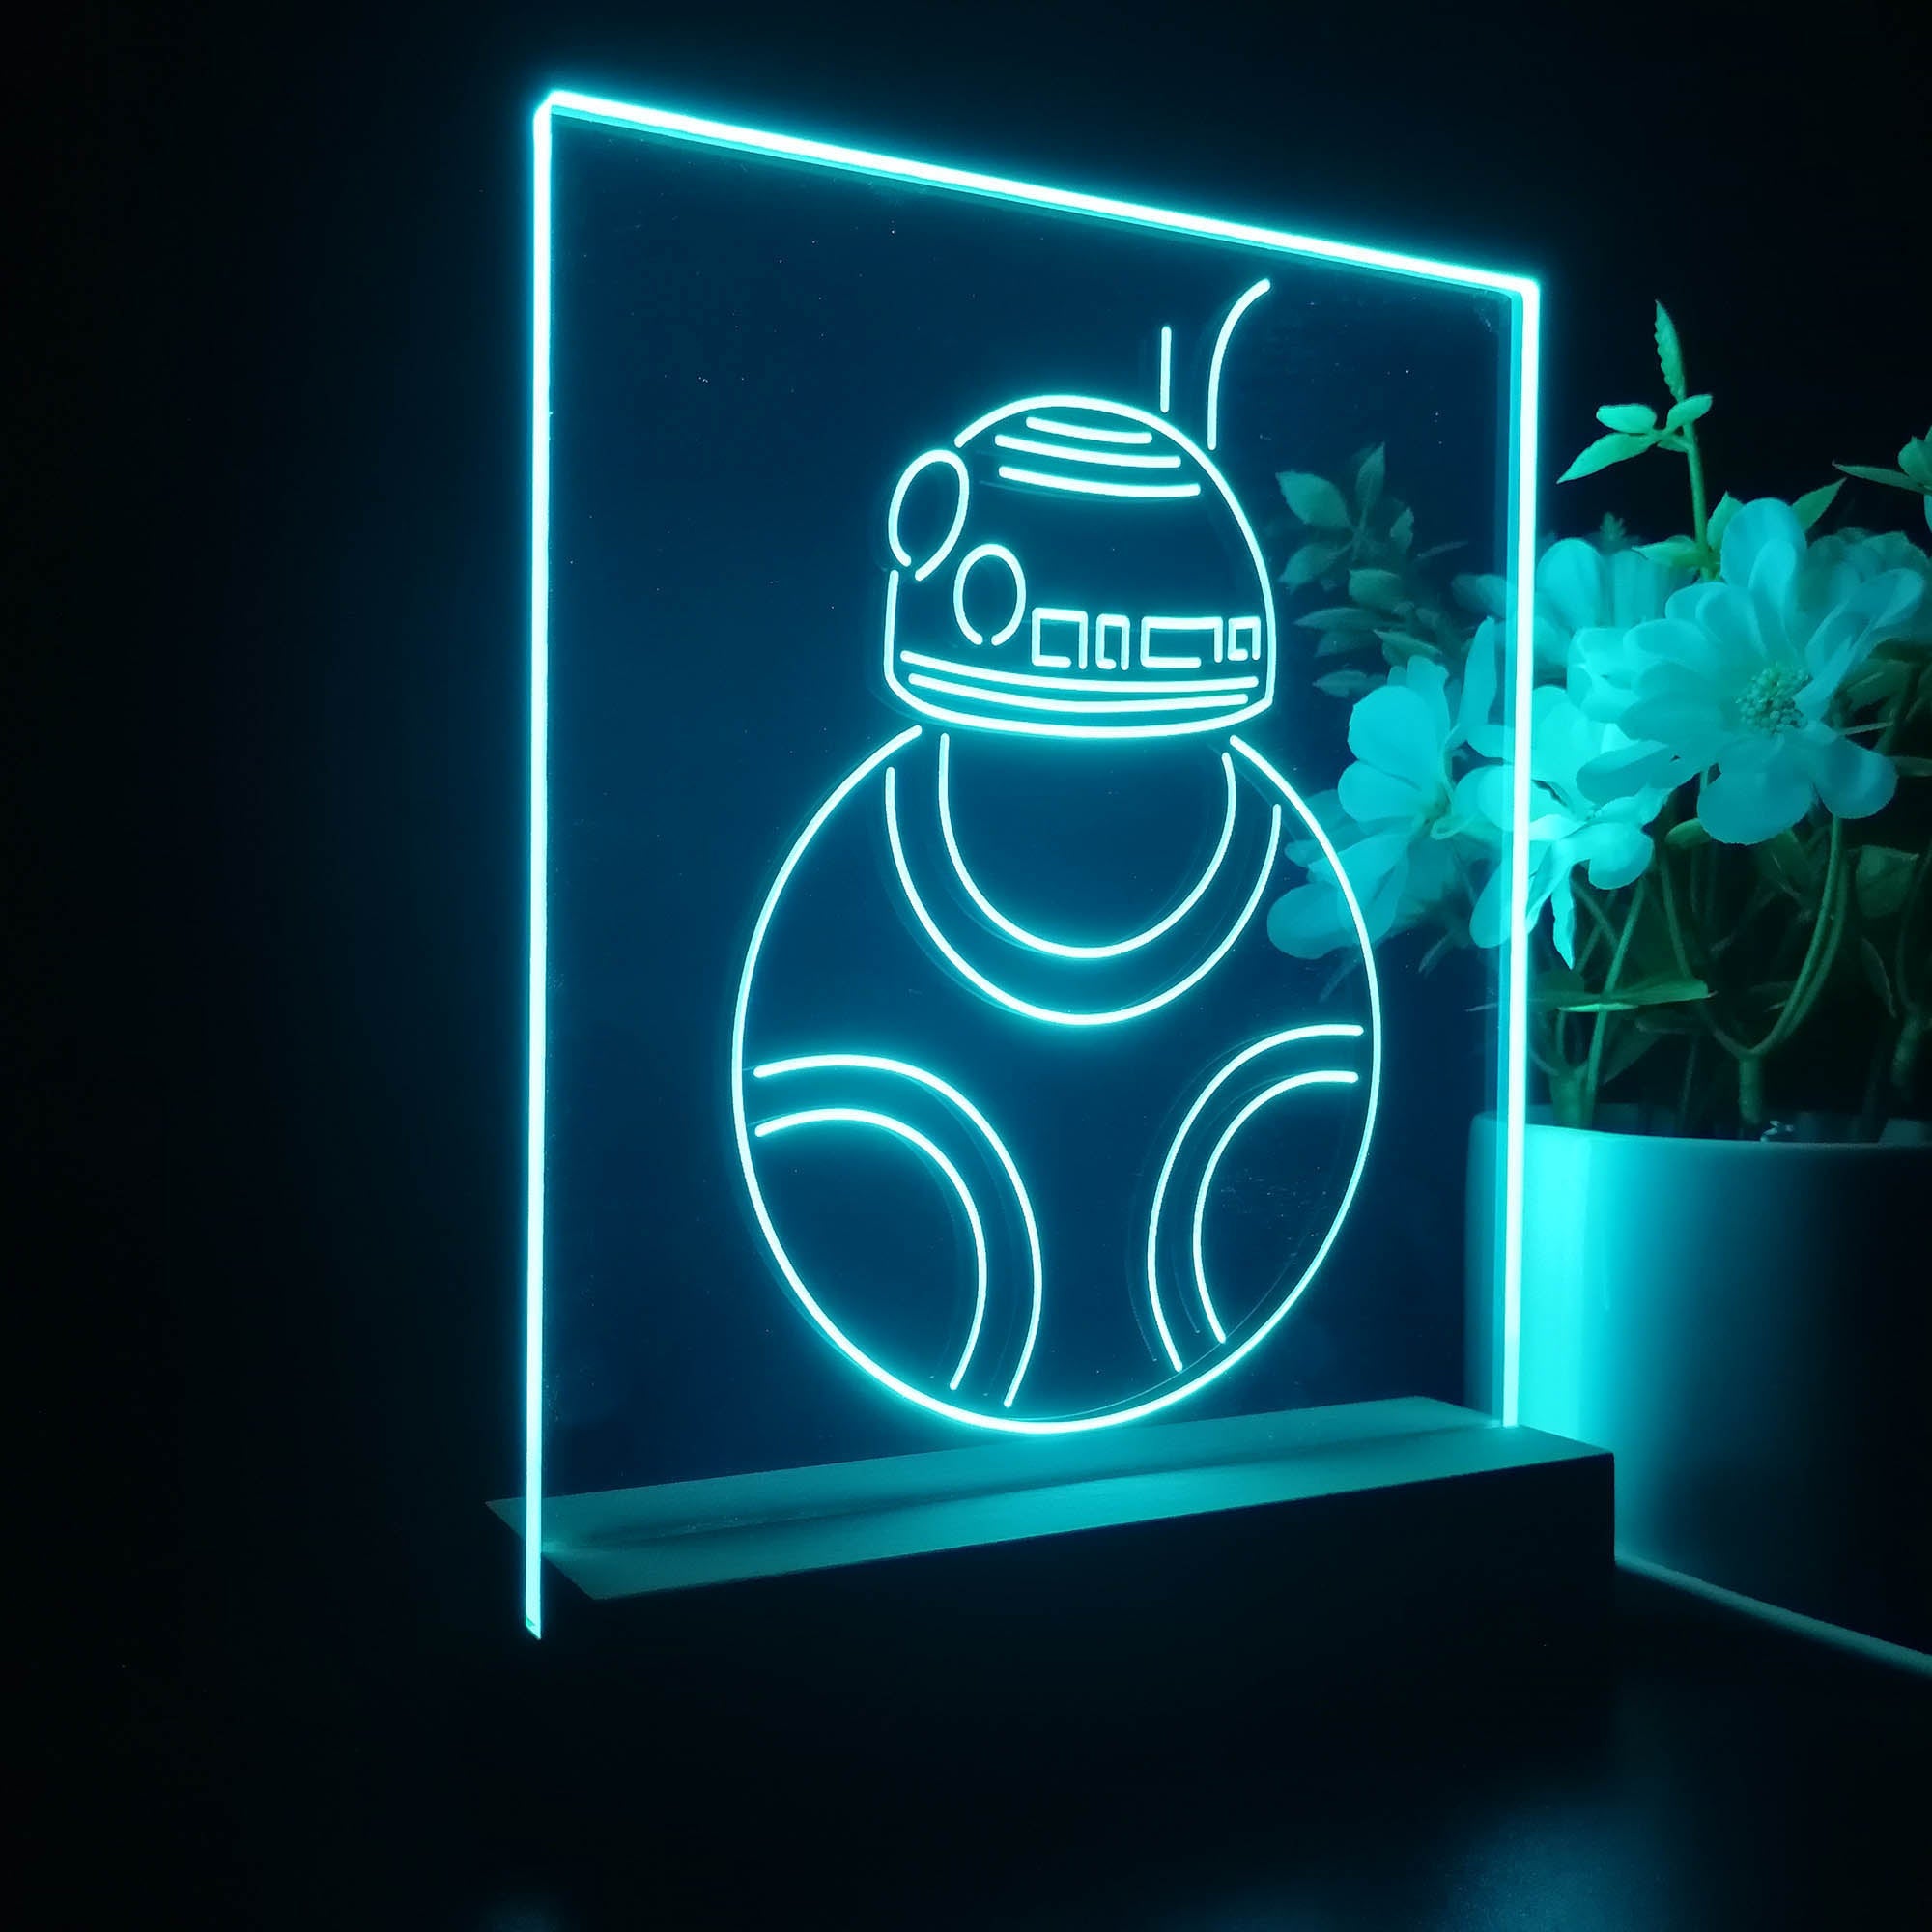 R2-C2 Robot Star Wars 3D Illusion Night Light Desk Lamp